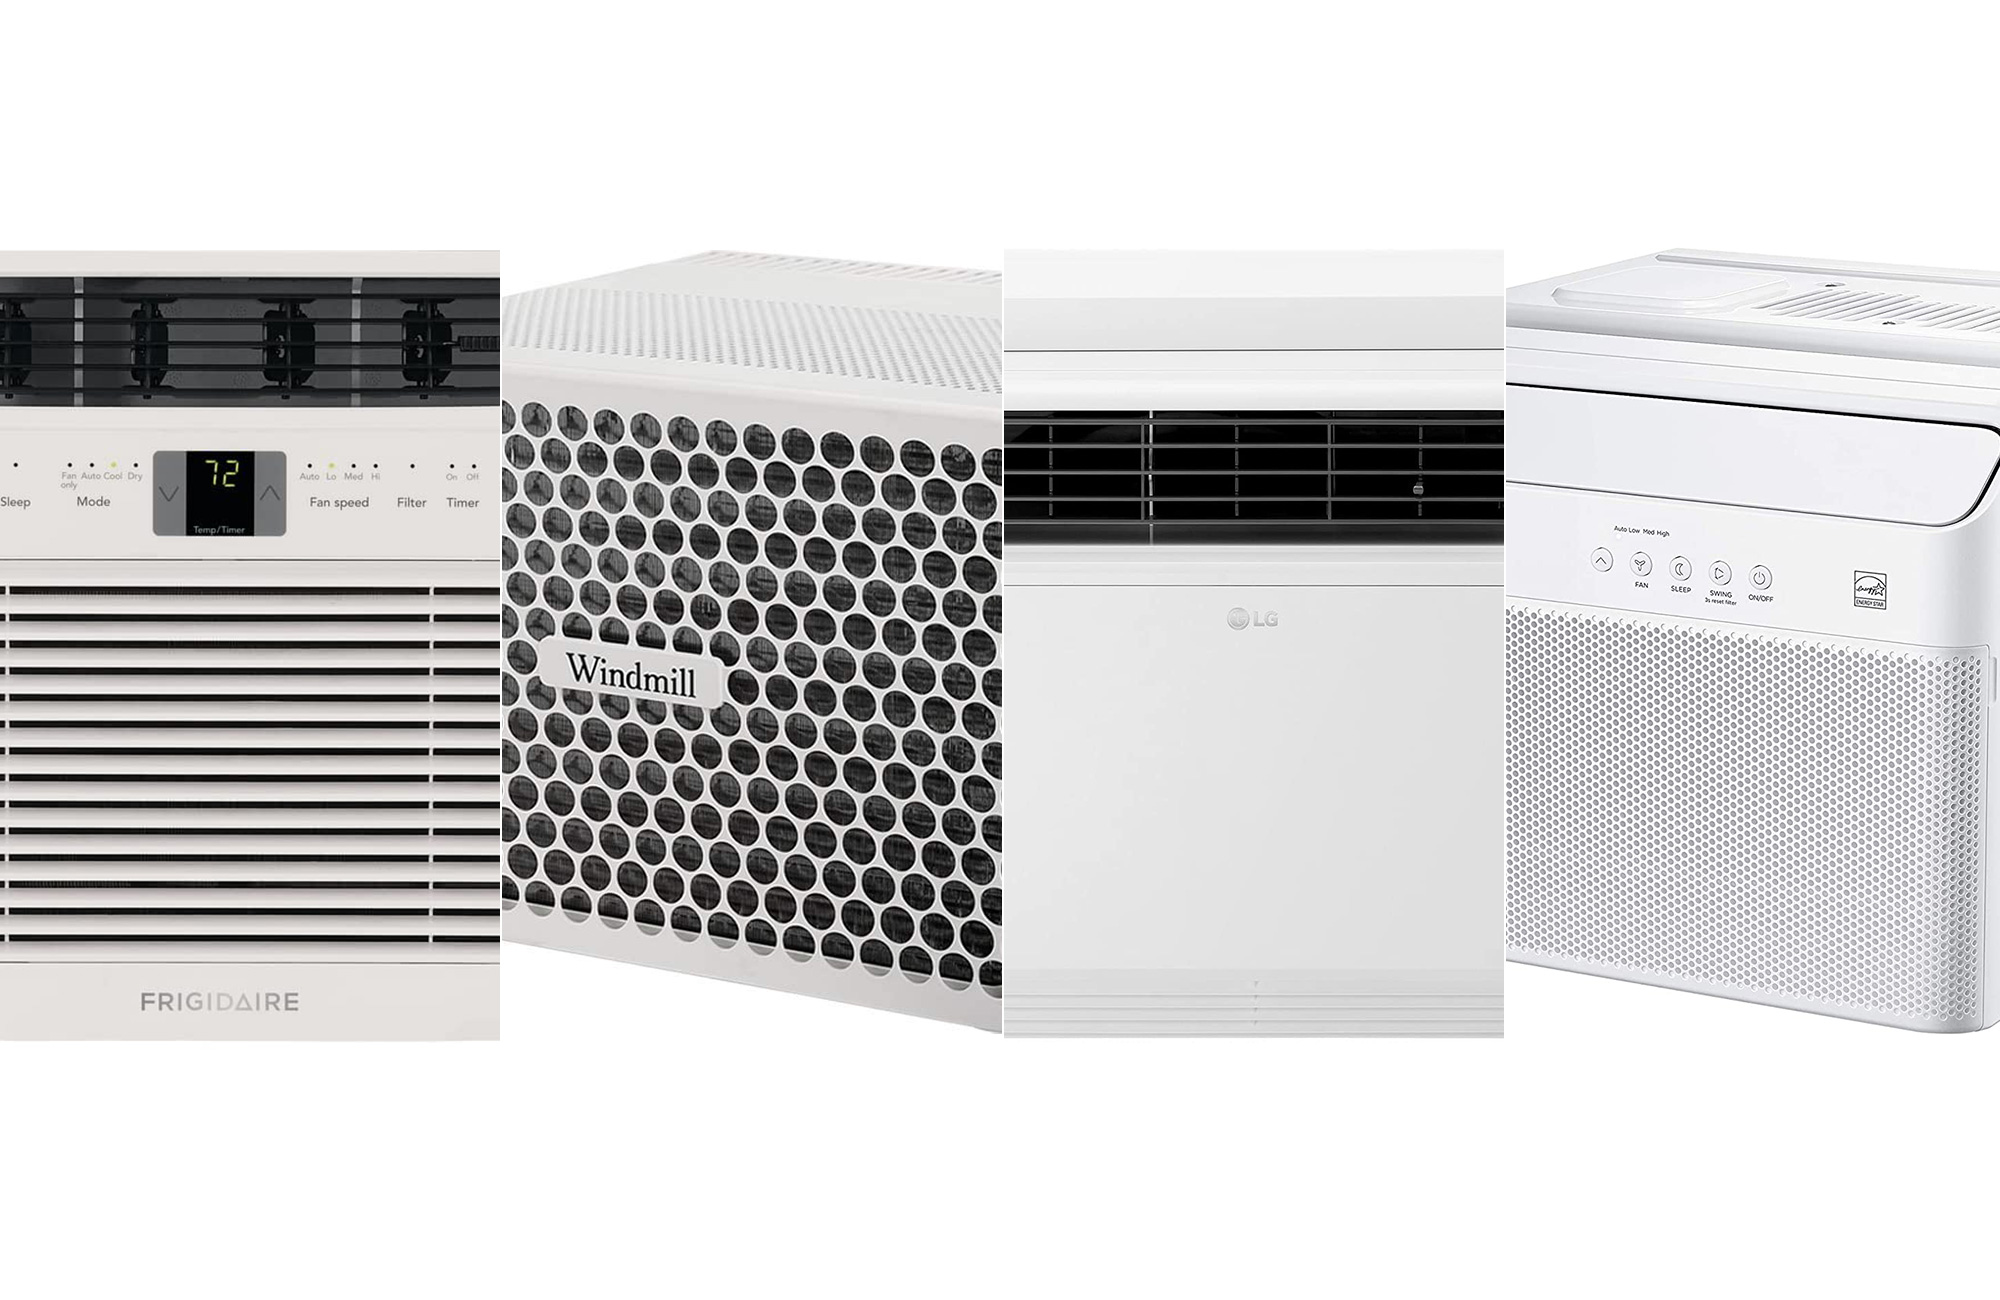 https://www.popsci.com/uploads/2022/06/15/best-energy-efficient-air-conditioners.jpg?auto=webp